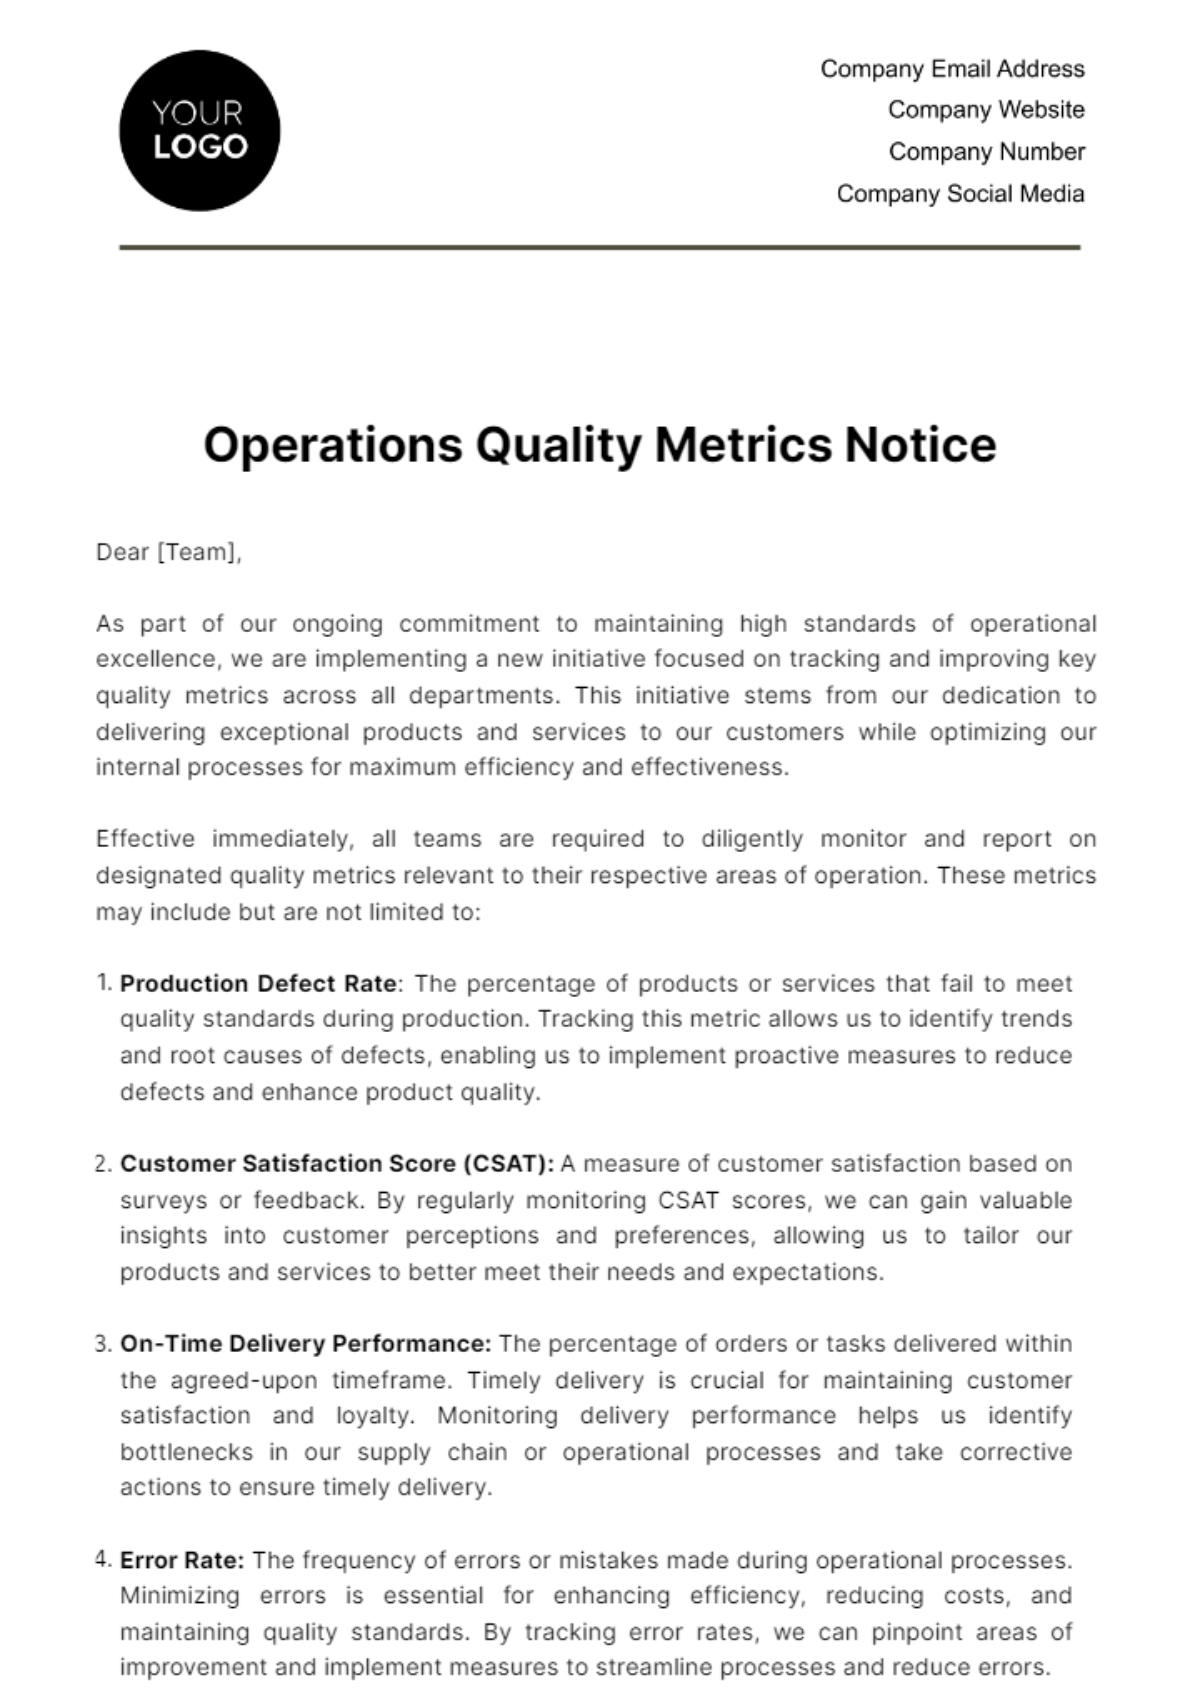 Operations Quality Metrics Notice Template